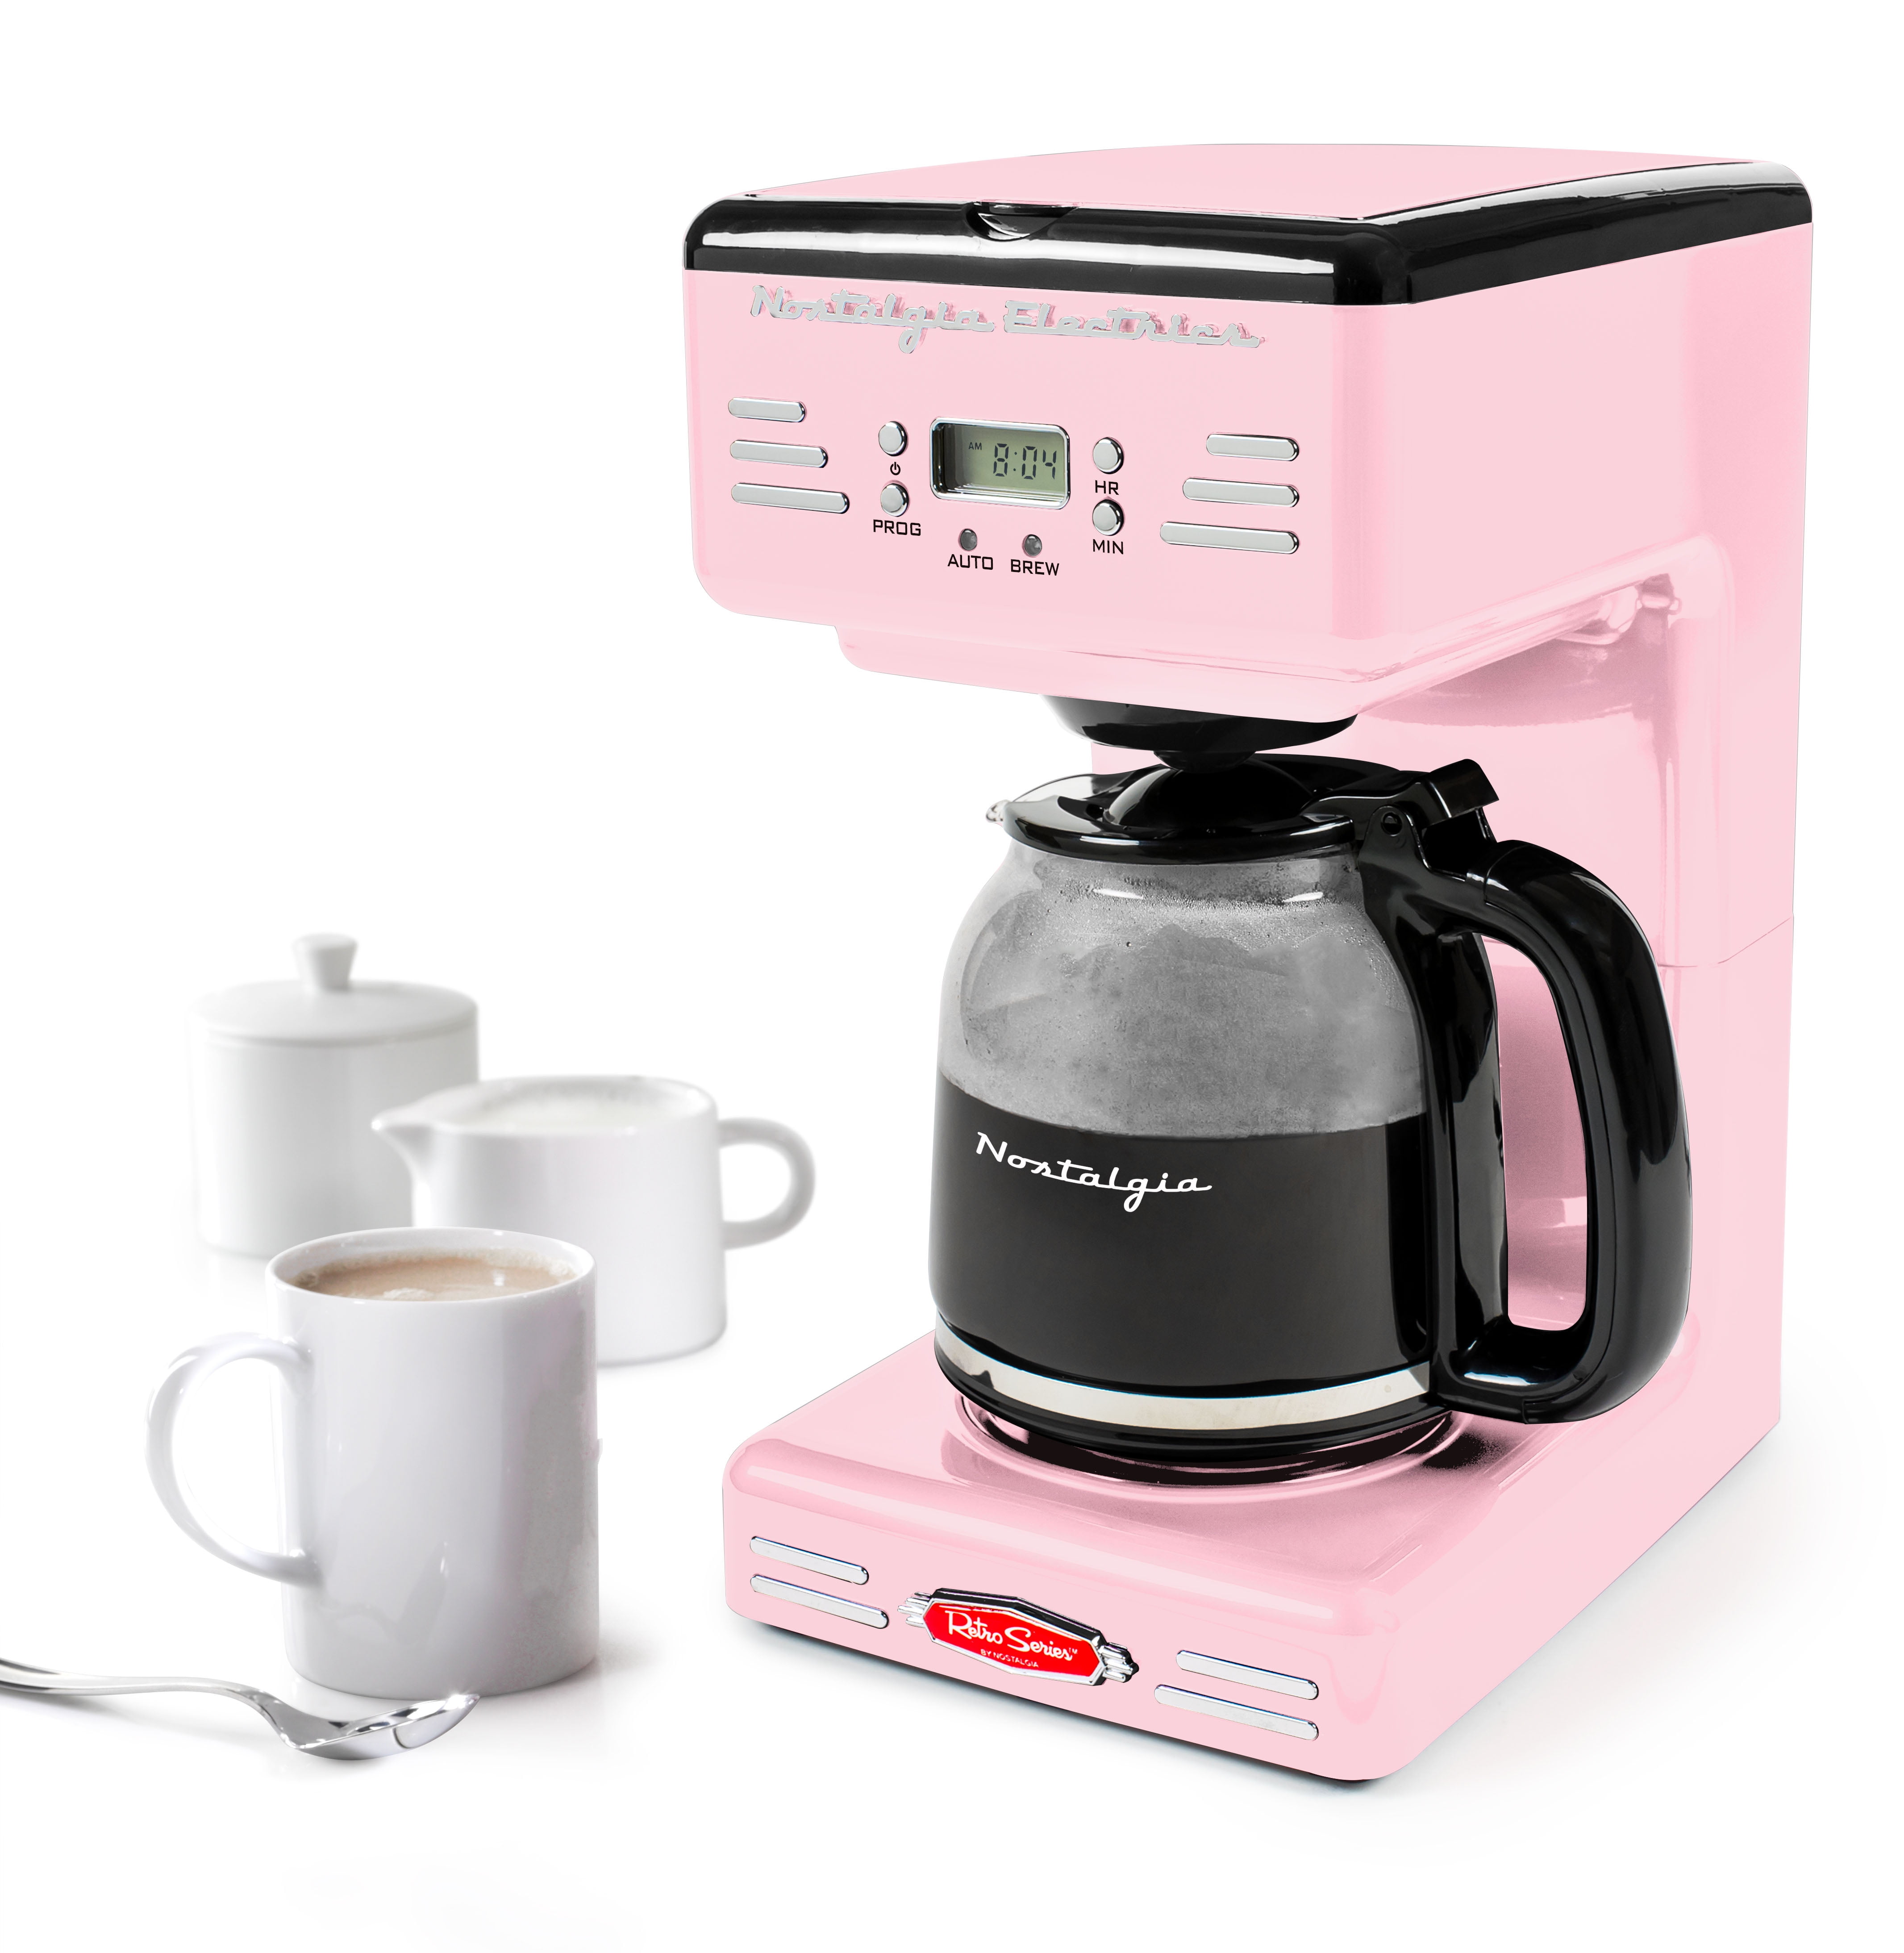 Smeg Pink Drip Coffee Maker + Reviews